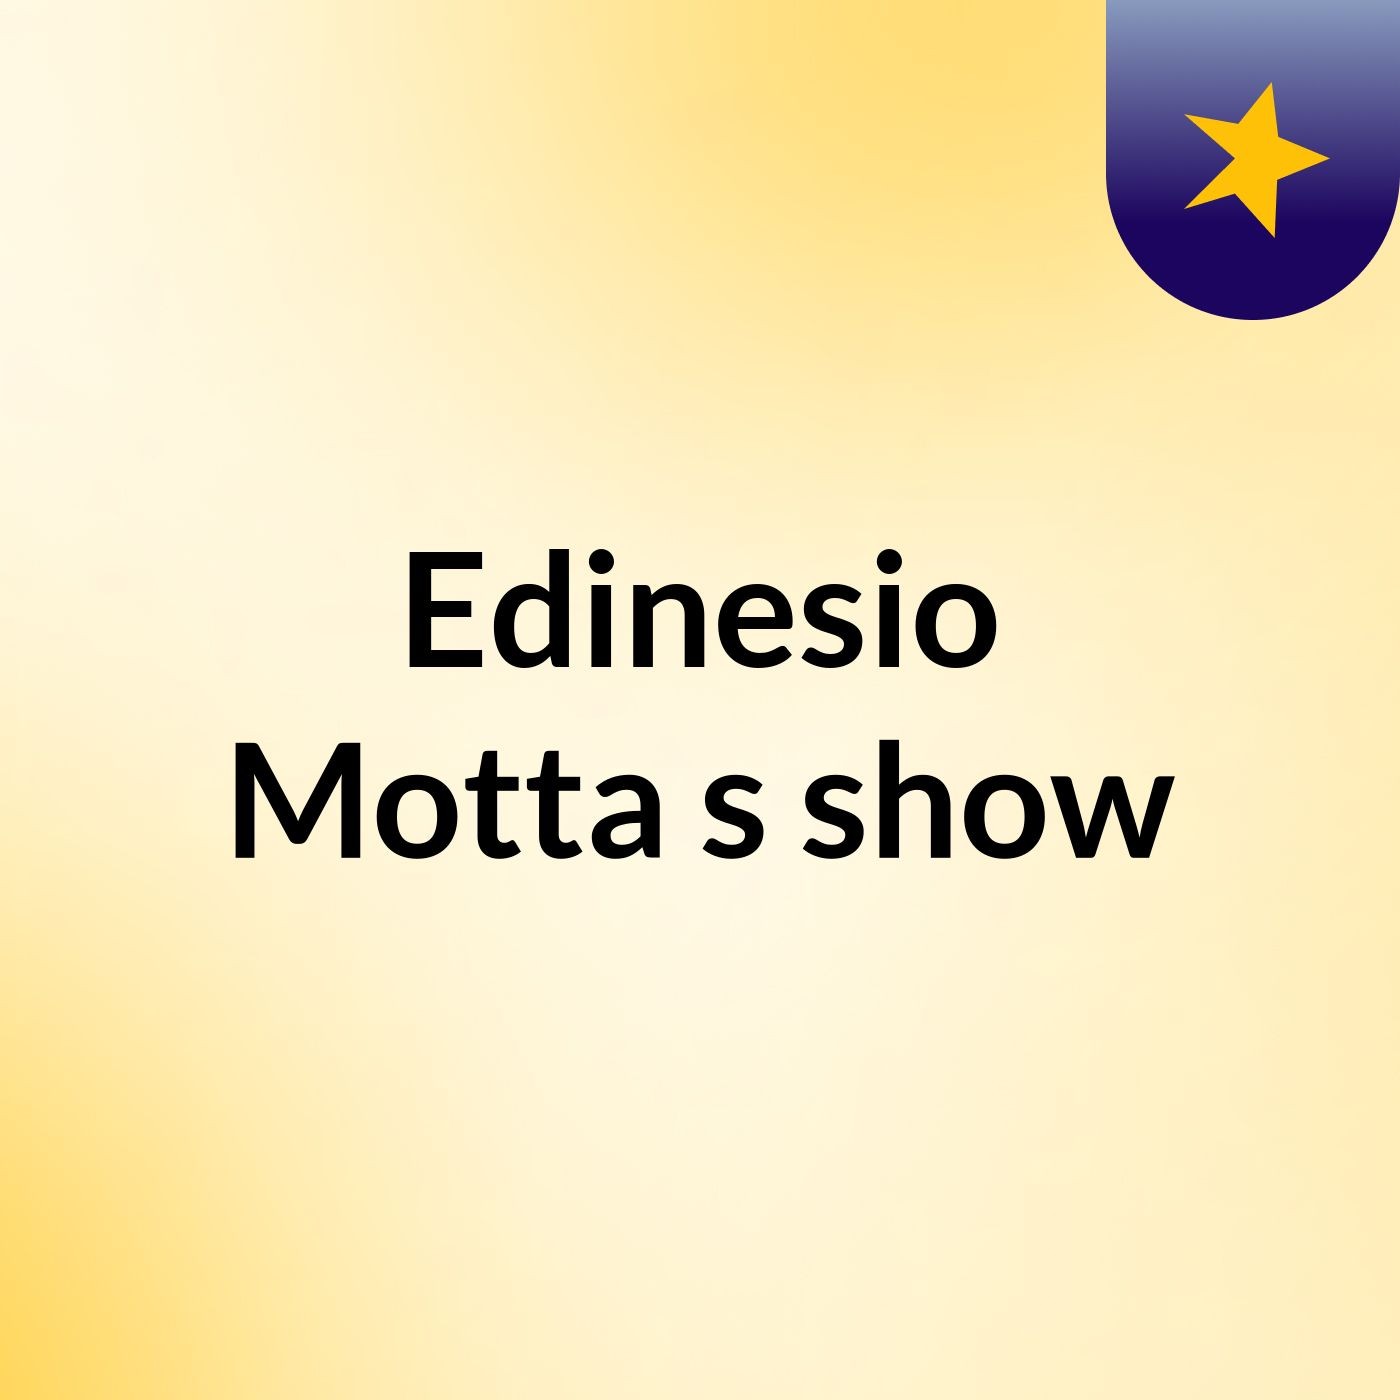 Edinesio Motta's show